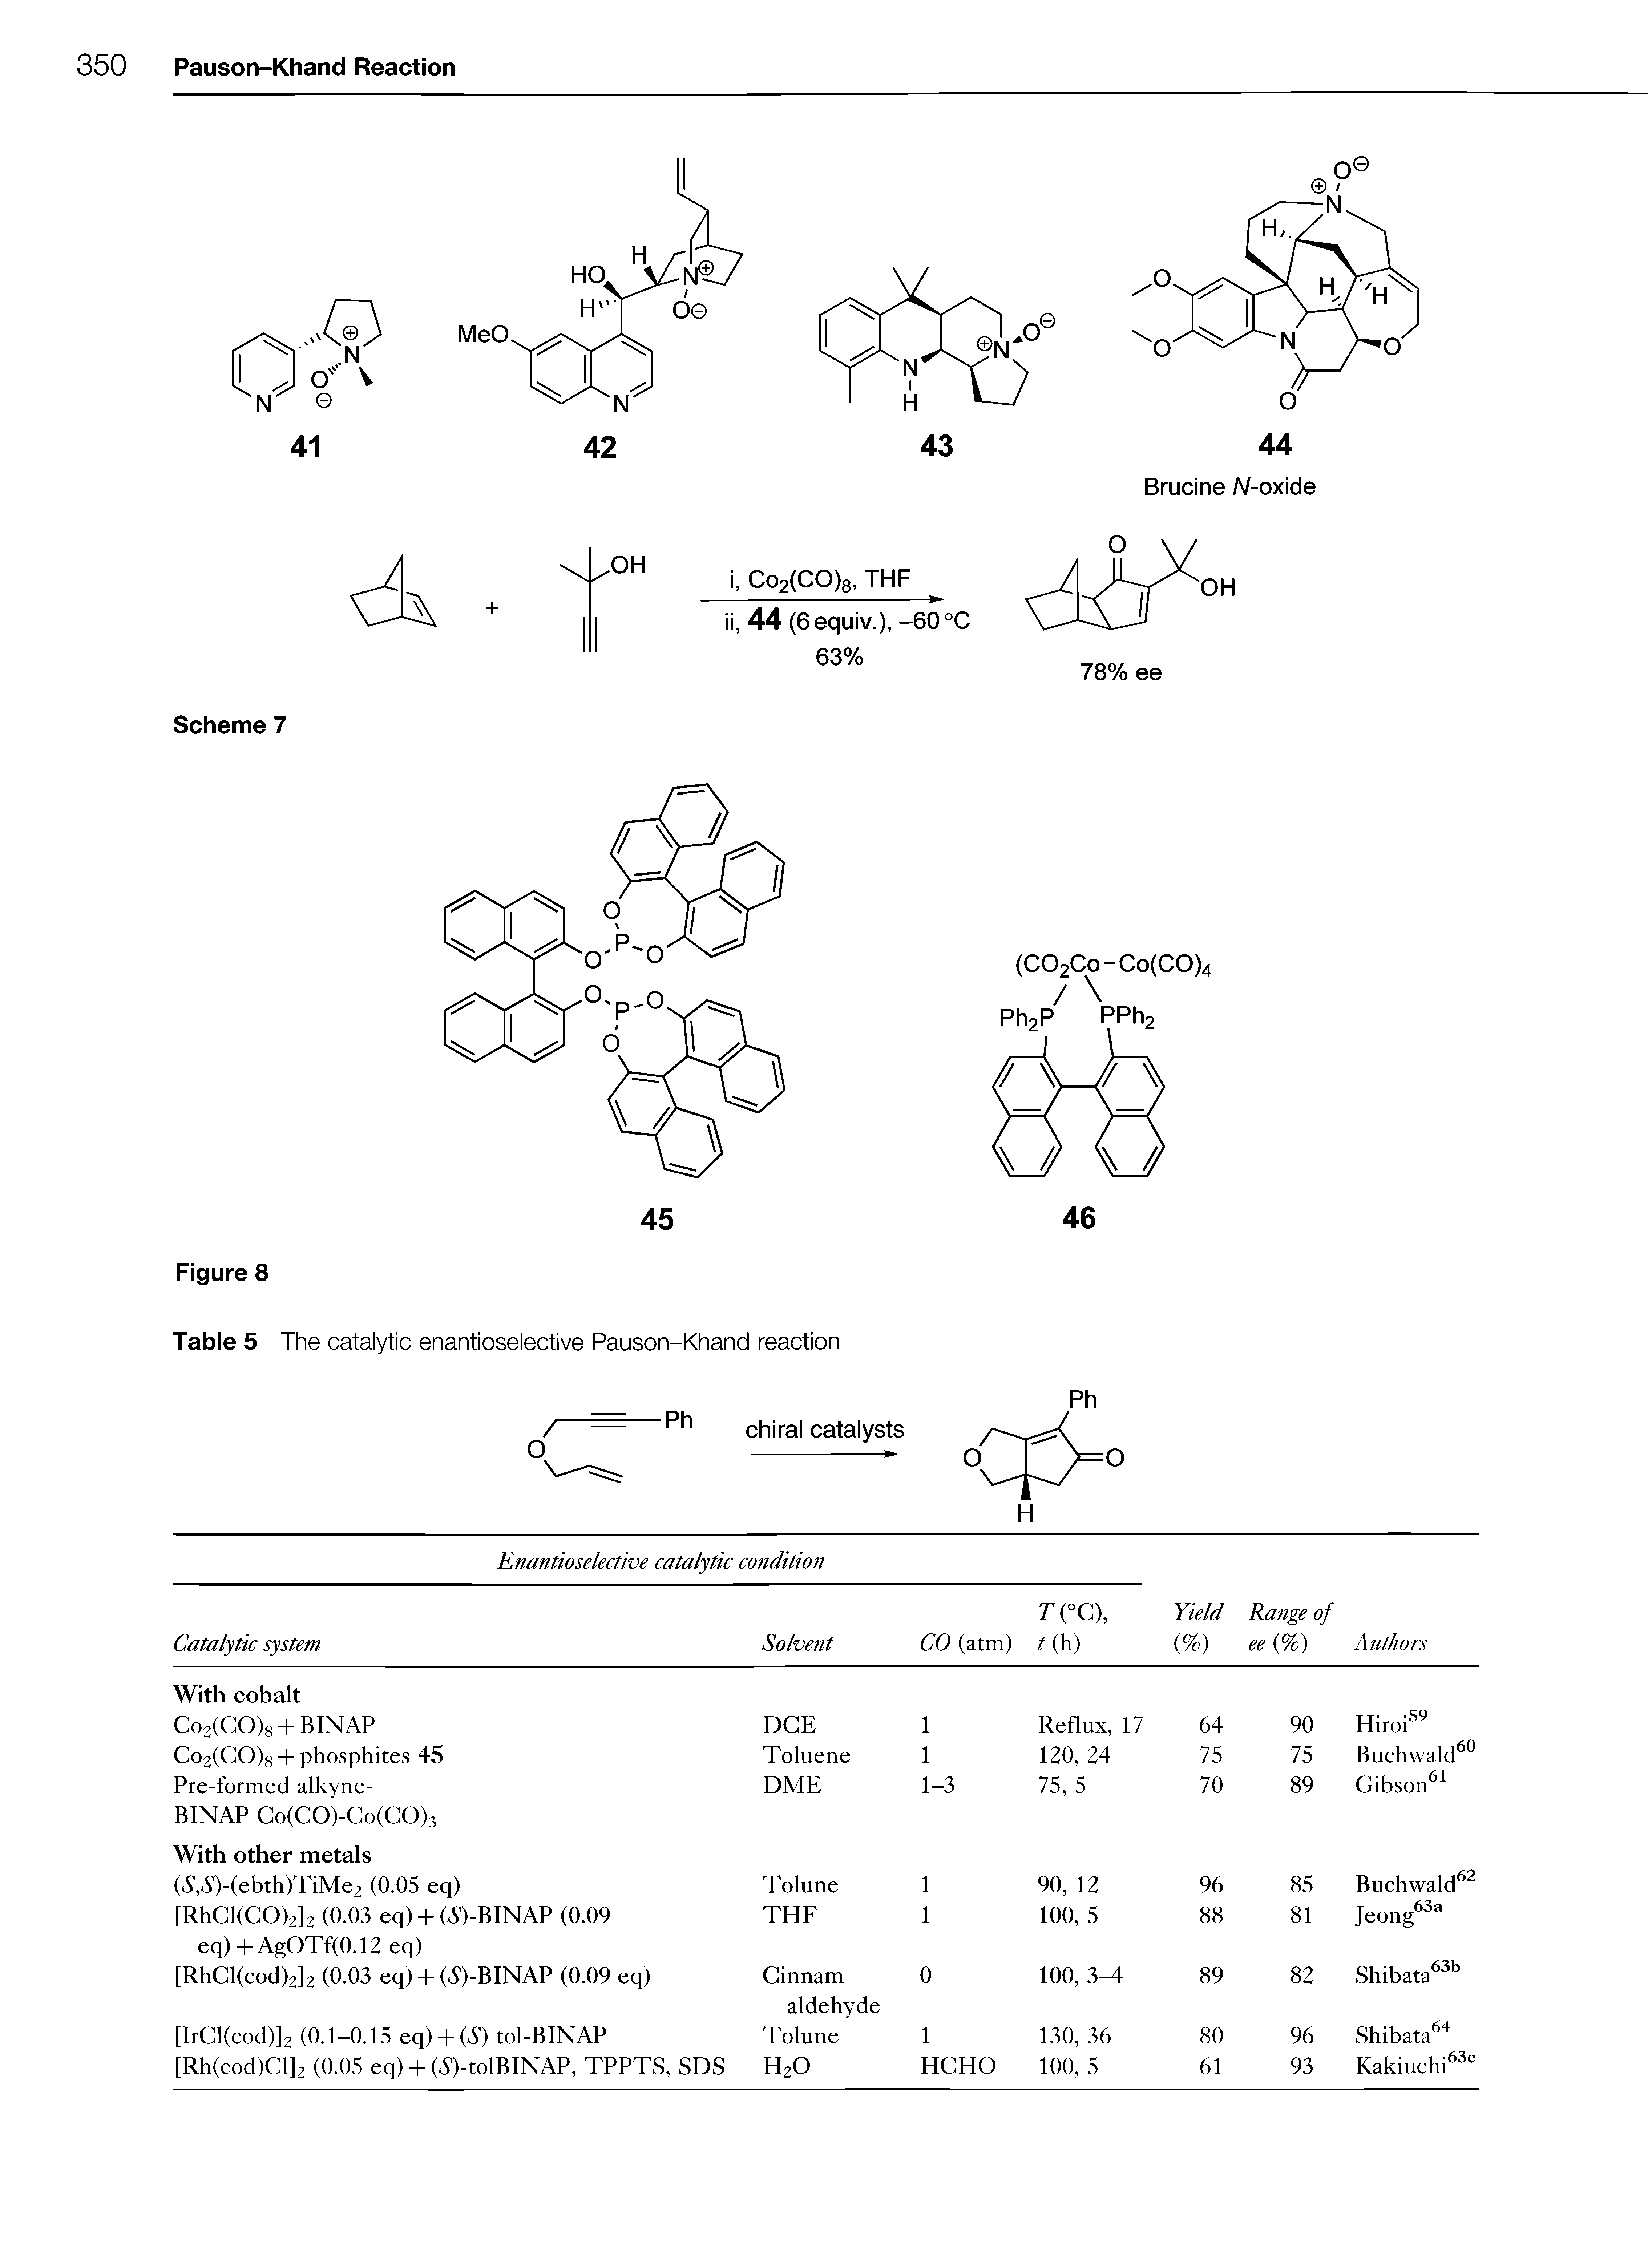 Table 5 The catalytic enantioselective Pauson-Khand reaction...